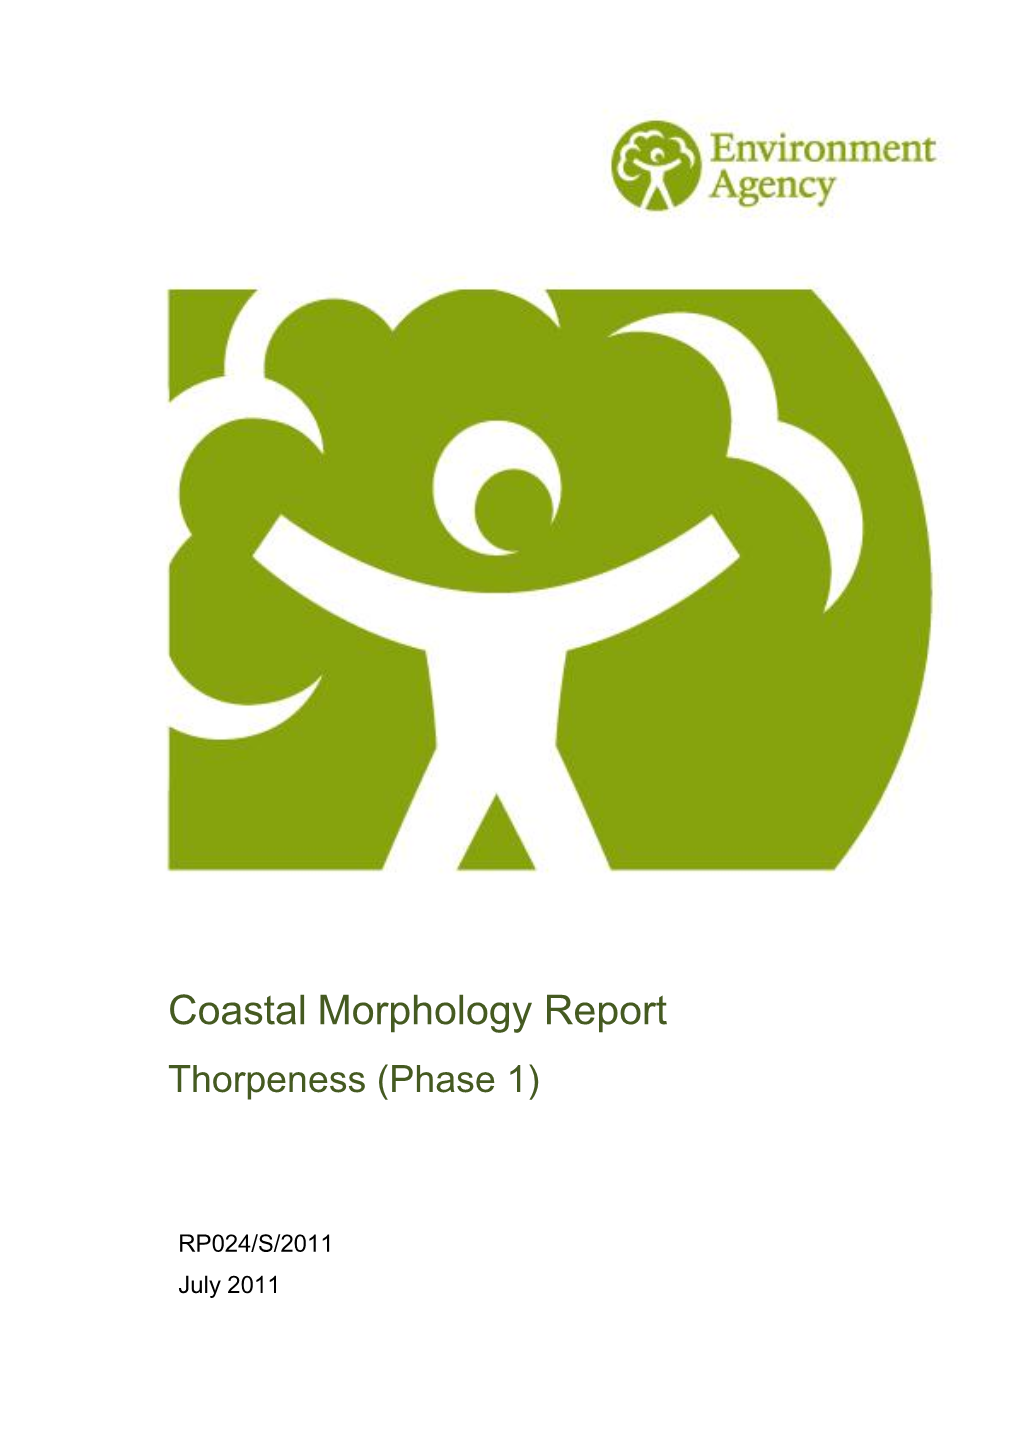 Coastal Morphology Report, Thorpeness 2011